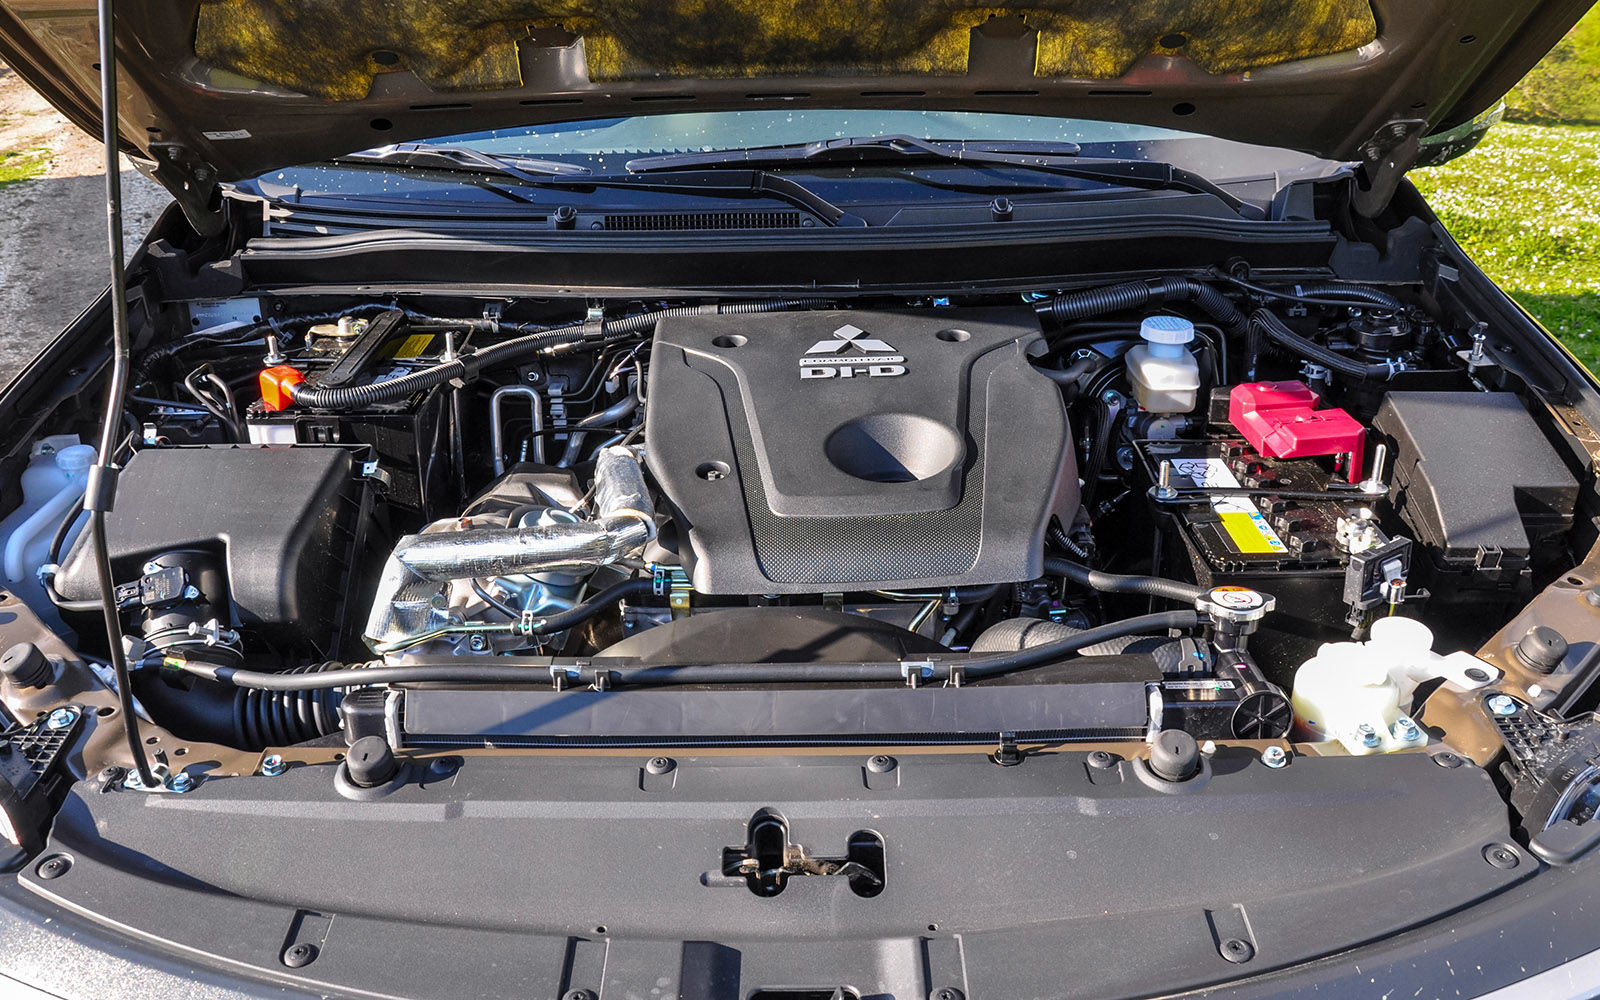 Паджеро спорт 1 двигатель. Двигатель Паджеро спорт 2. Mitsubishi Pajero Sport 3 двигатель. Mitsubishi Pajero Sport 2 подкапотное пространство. Pajero Sport 2018 под капотом.